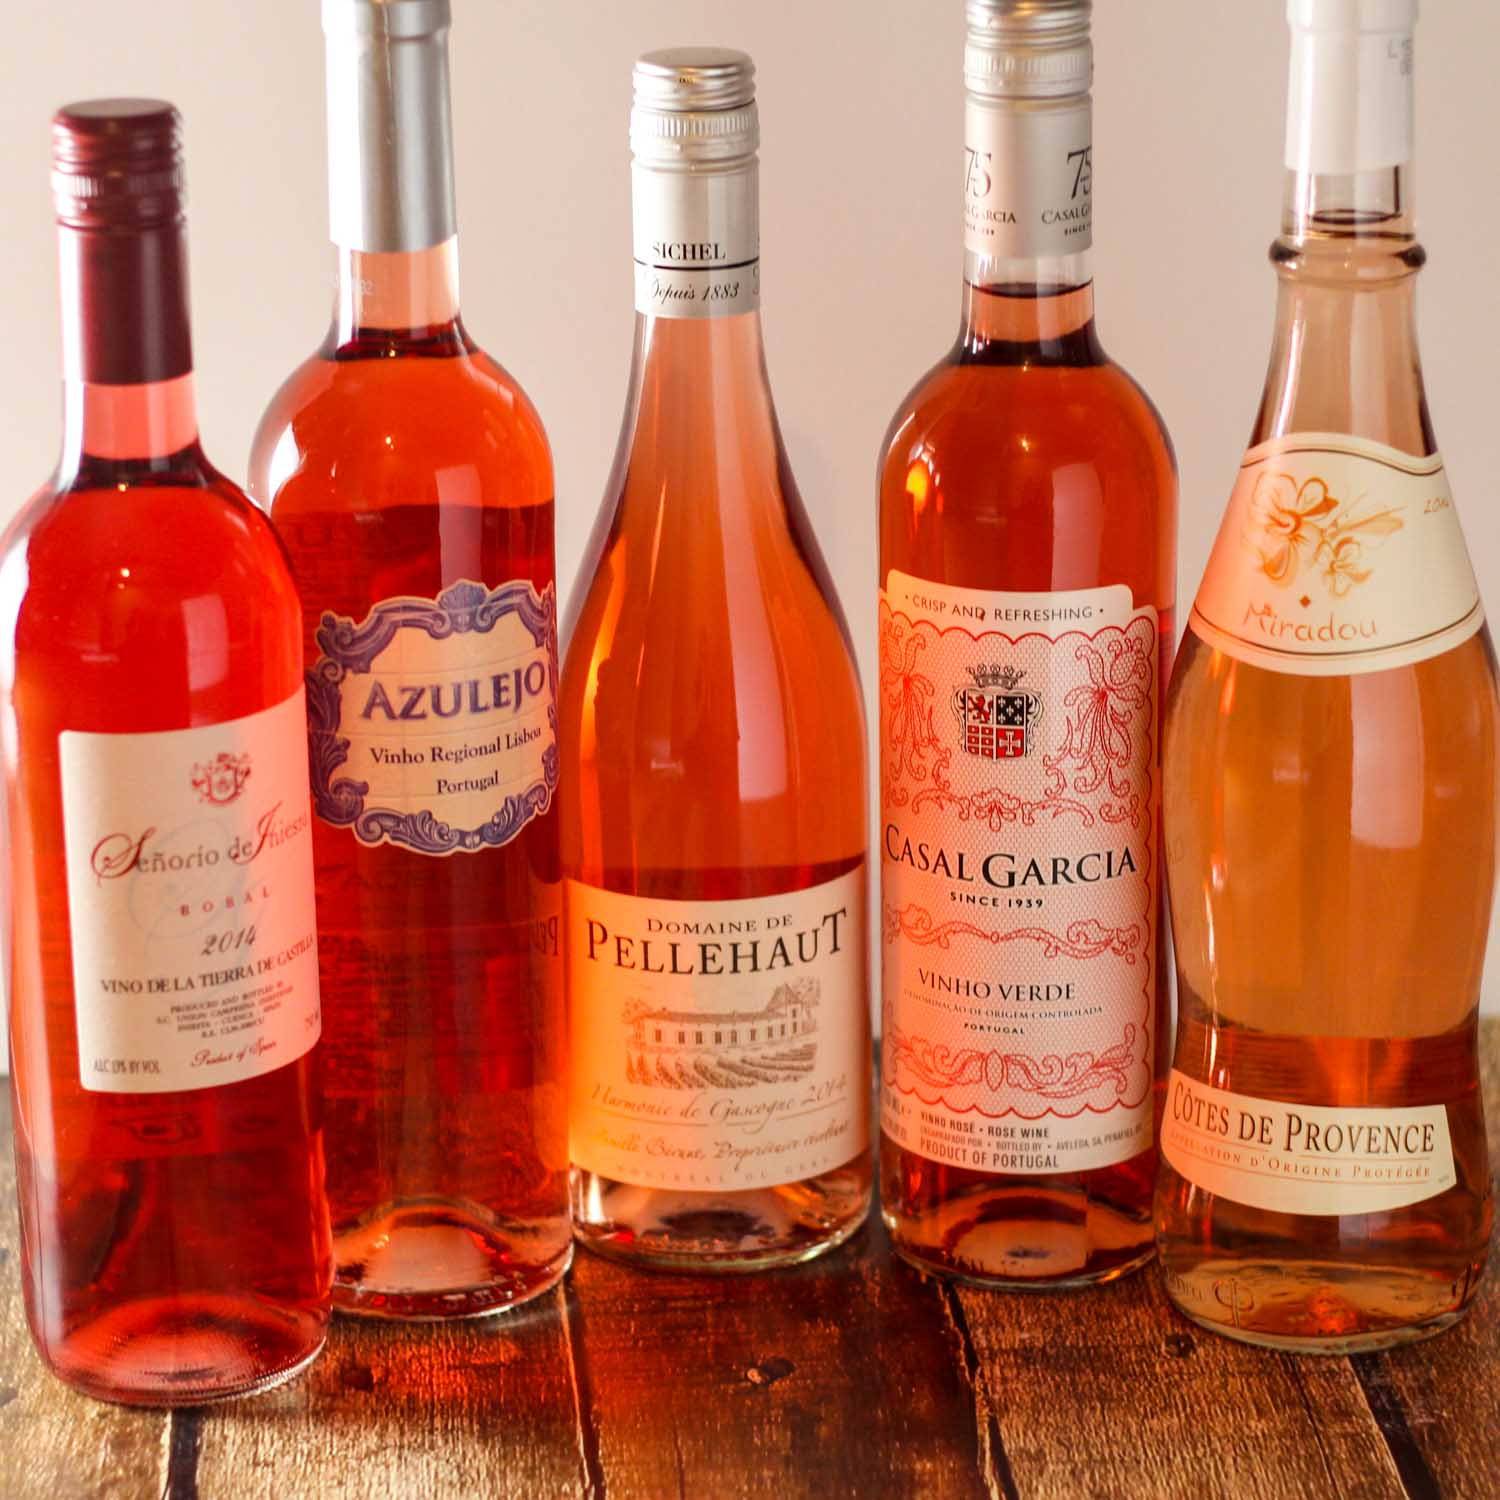 5 Great Rosé Wines Under $10 platingsandpairings.com